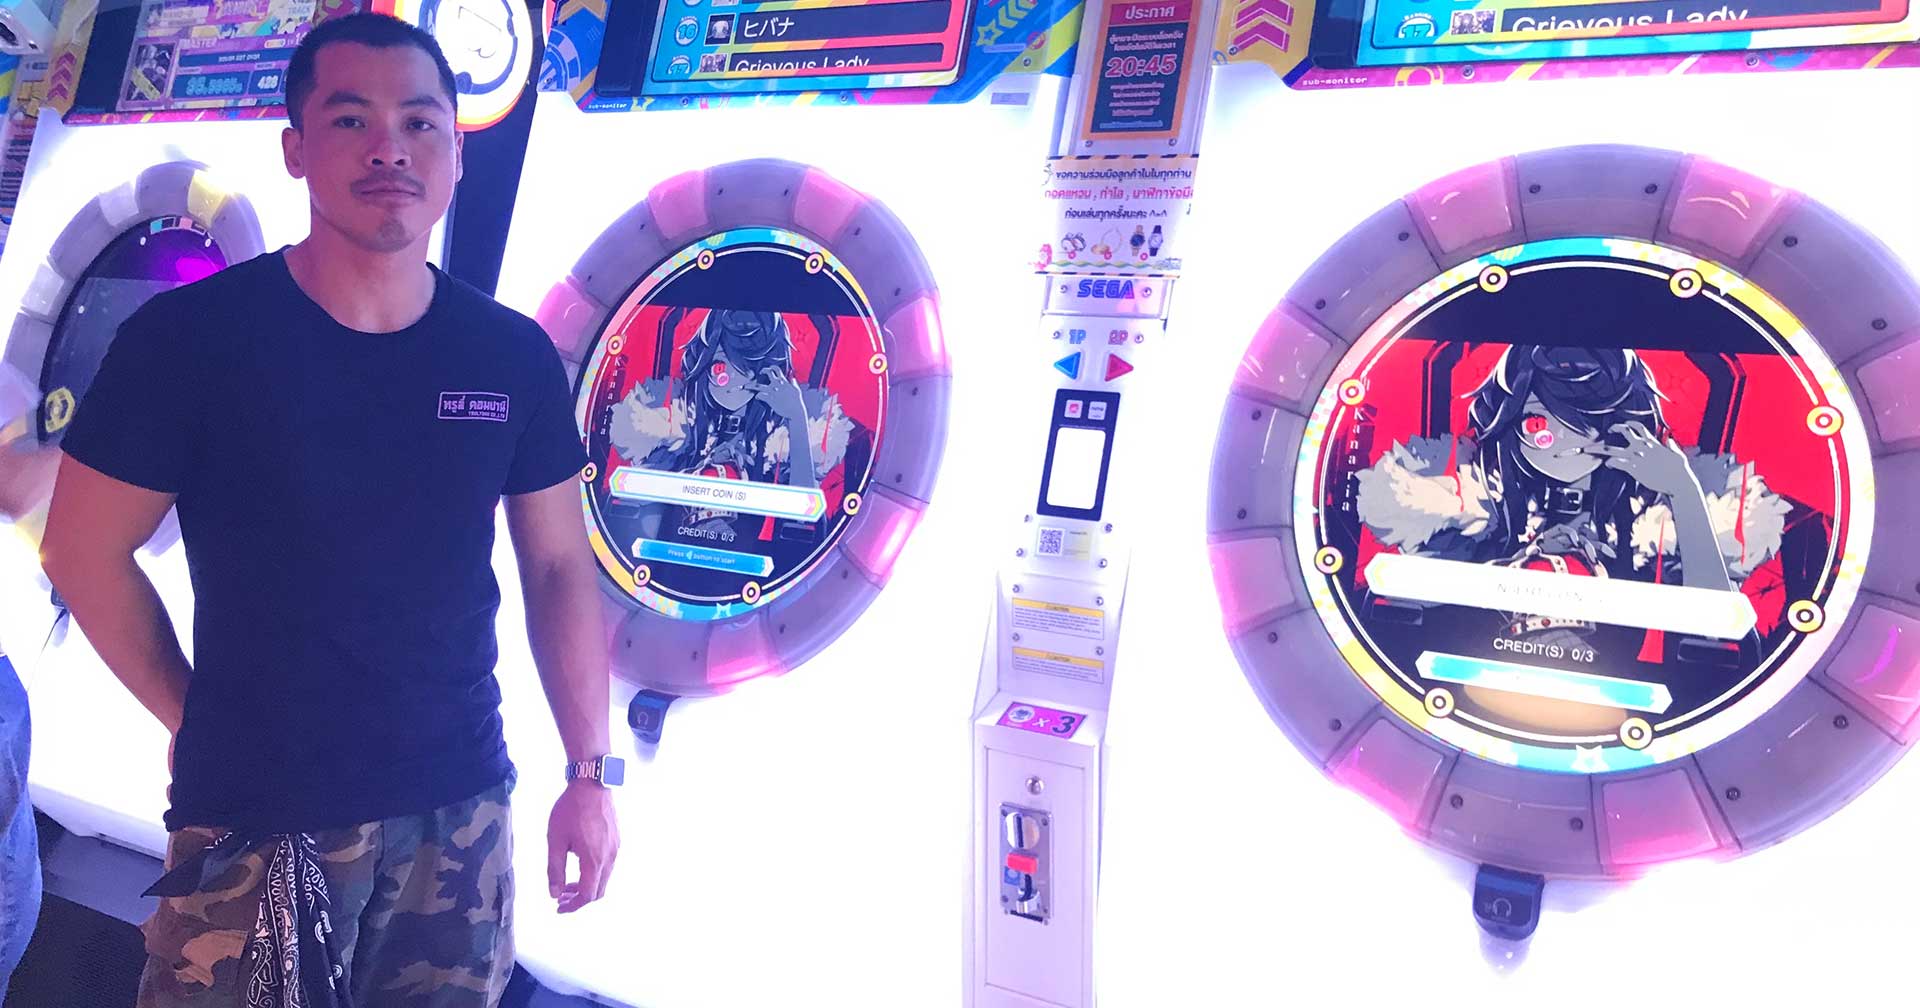 Ex10 Karaoke & Games (MBK) อาณาจักร Arcade ที่เกมเมอร์สาย Rhythm Games ต้องมา!!